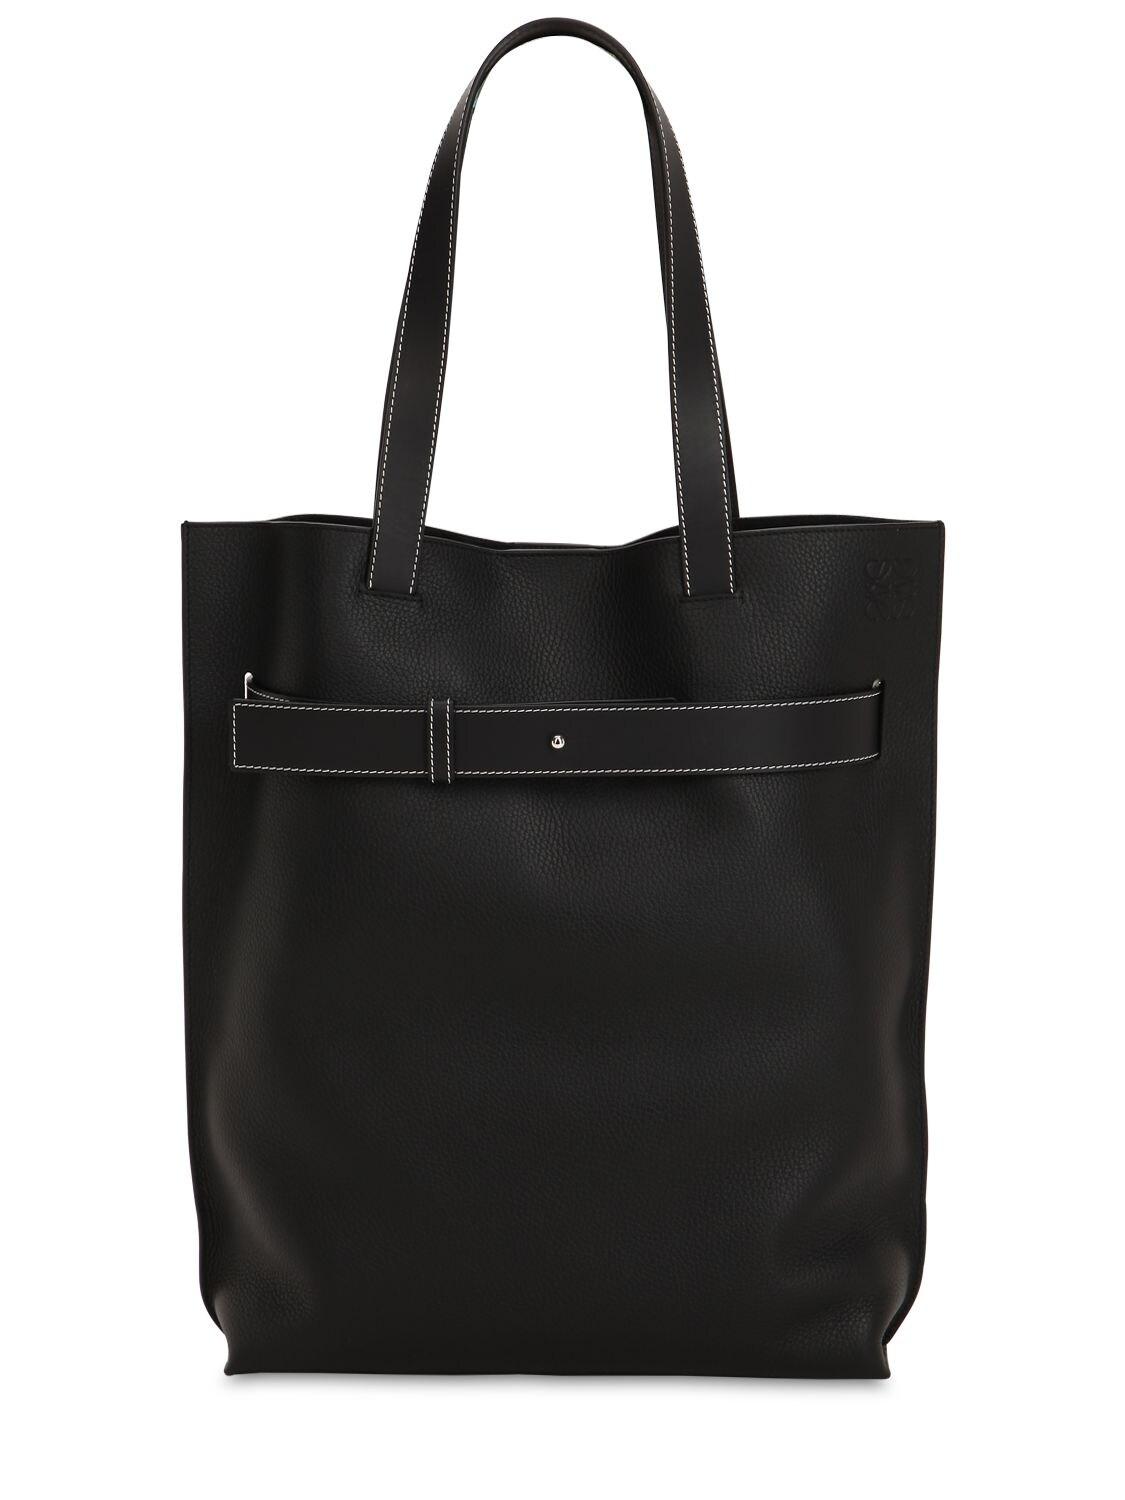 Loewe Strap Vertical Leather Tote Bag in Black for Men - Lyst